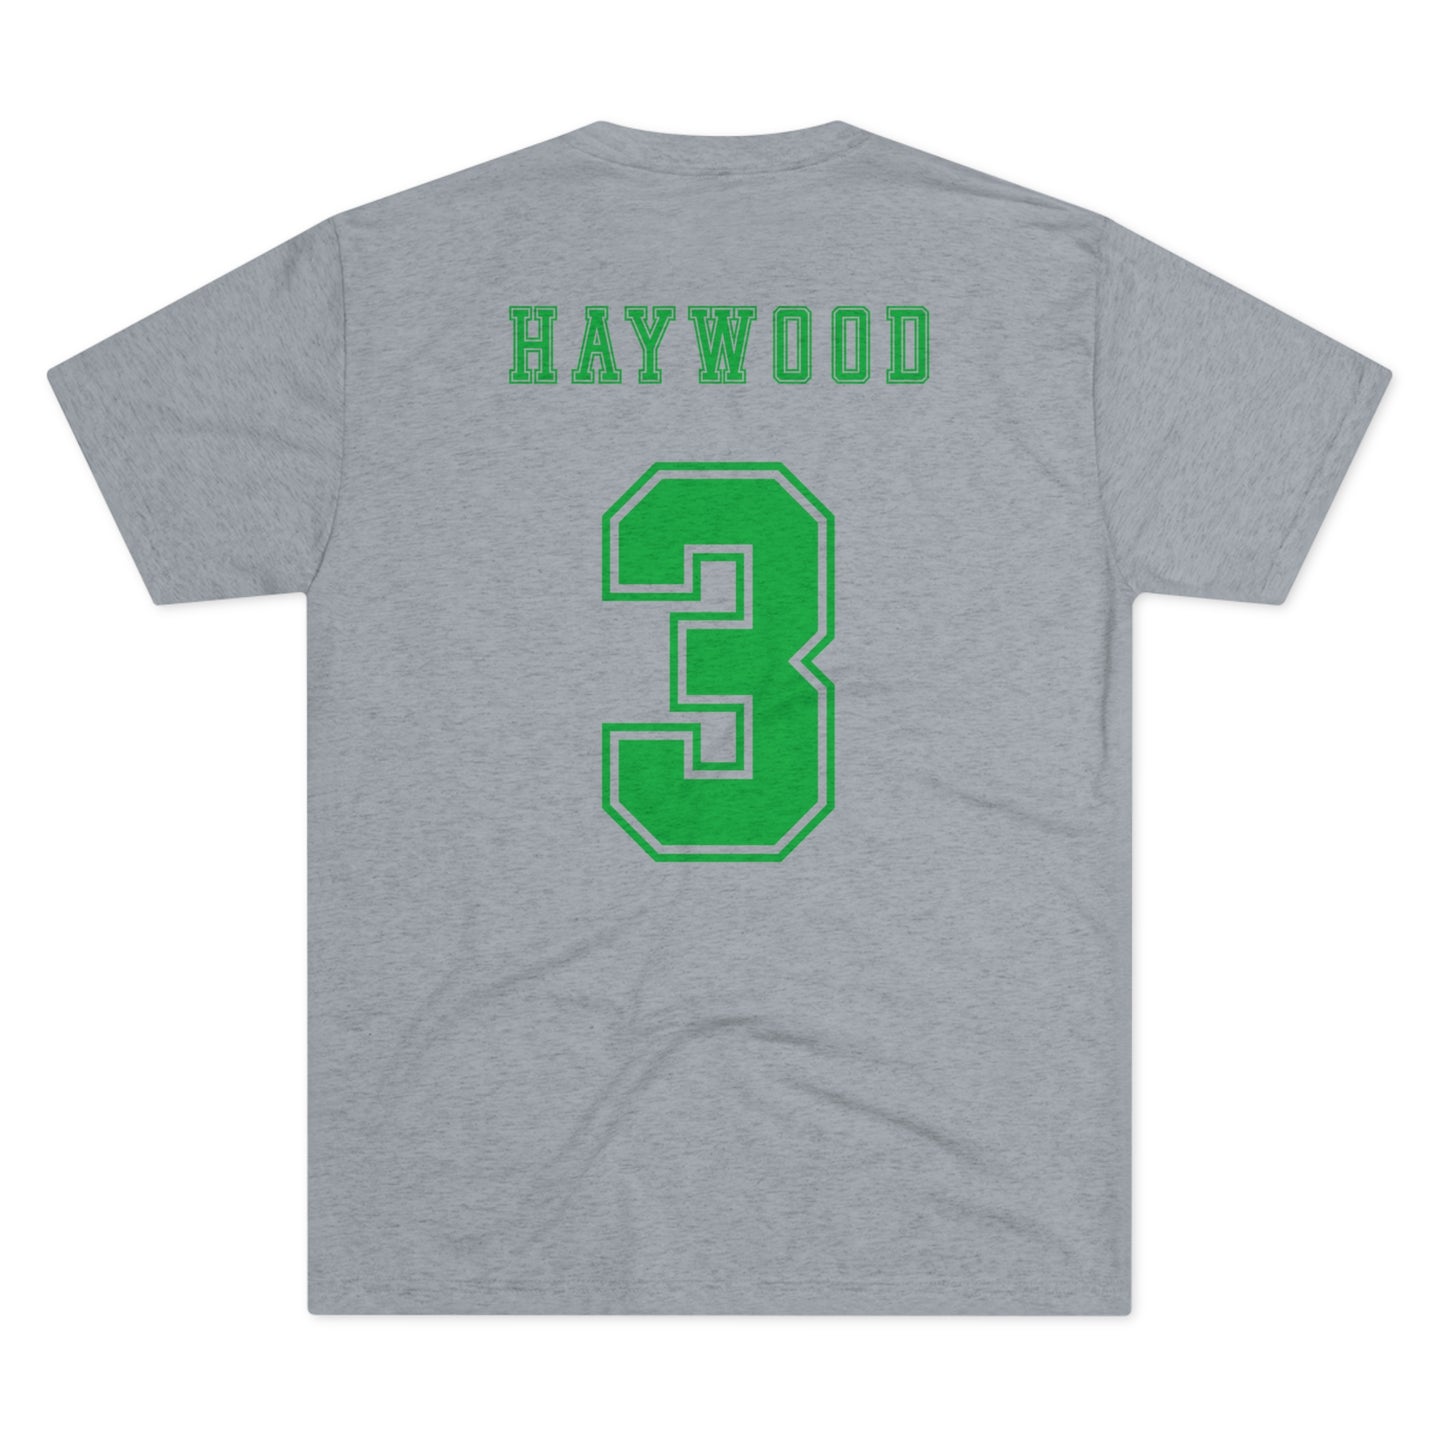 HAYWOOD #3 (option A) - Unisex Tri-Blend Crew Tee